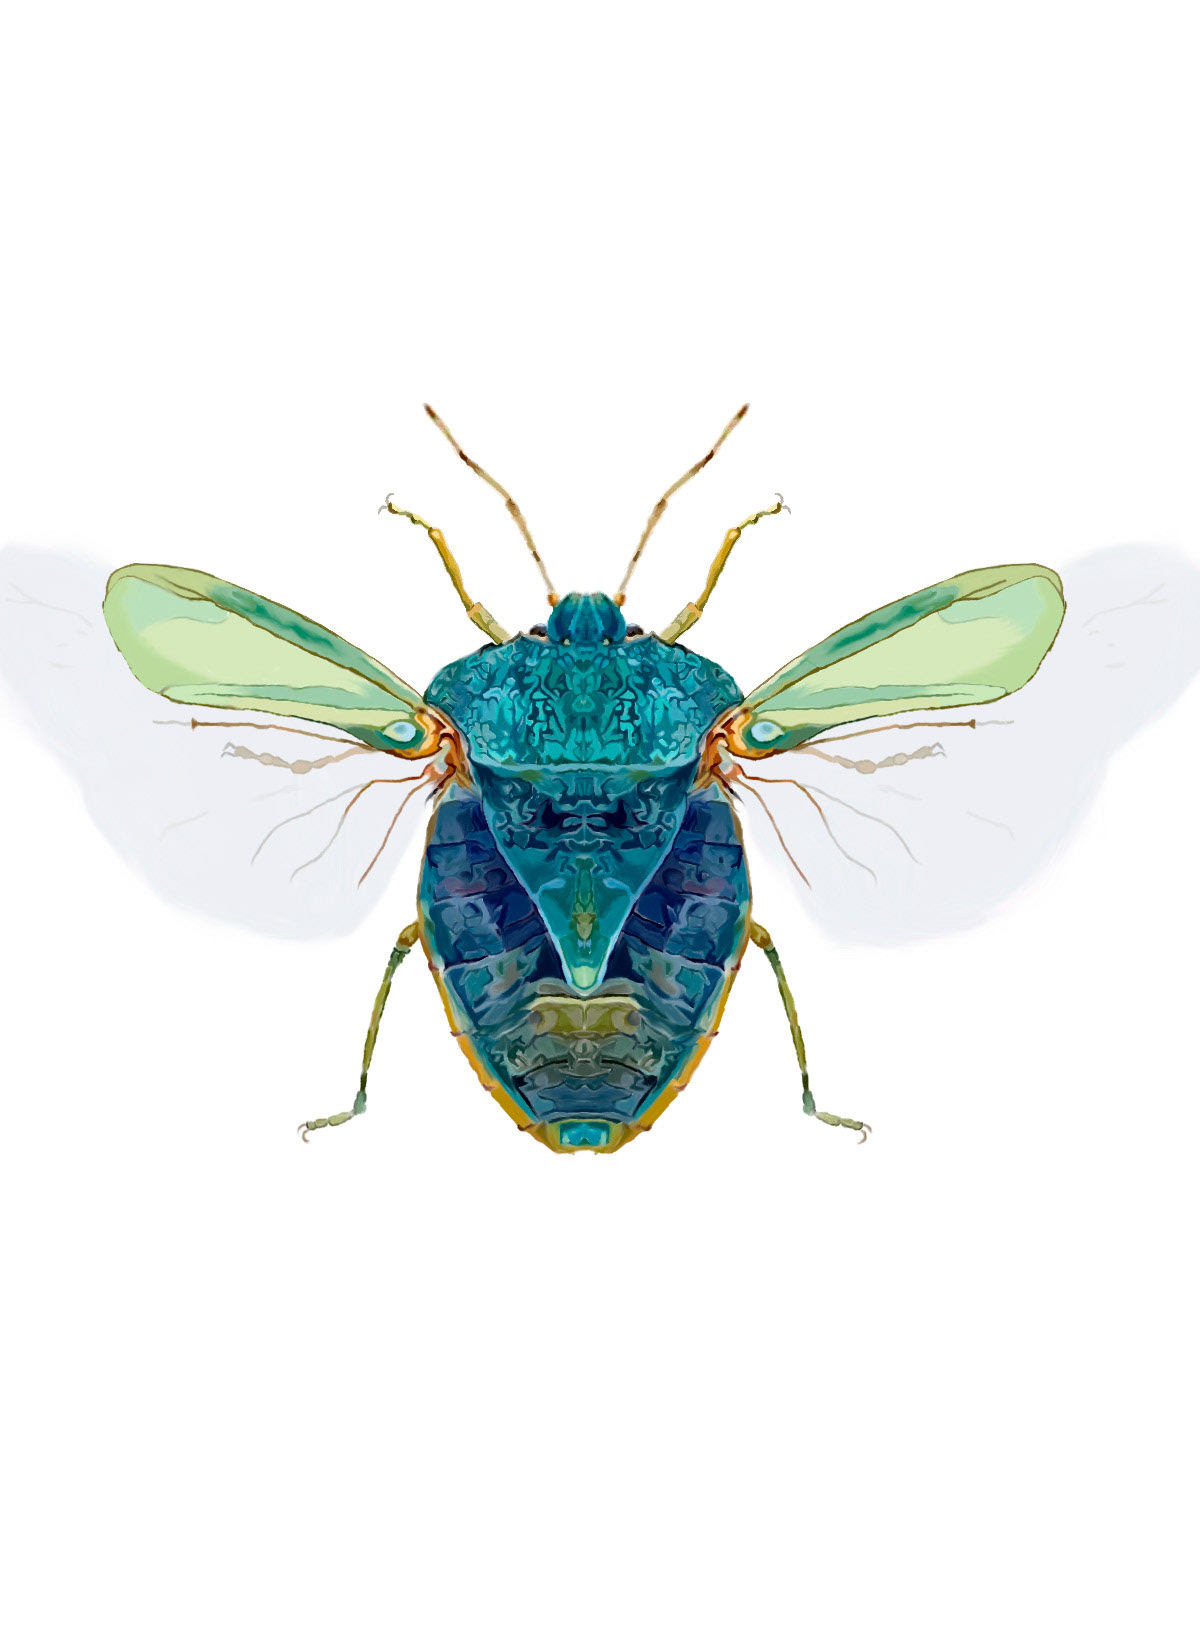 insect ILLUSTRATION  Digital Art  photoshop